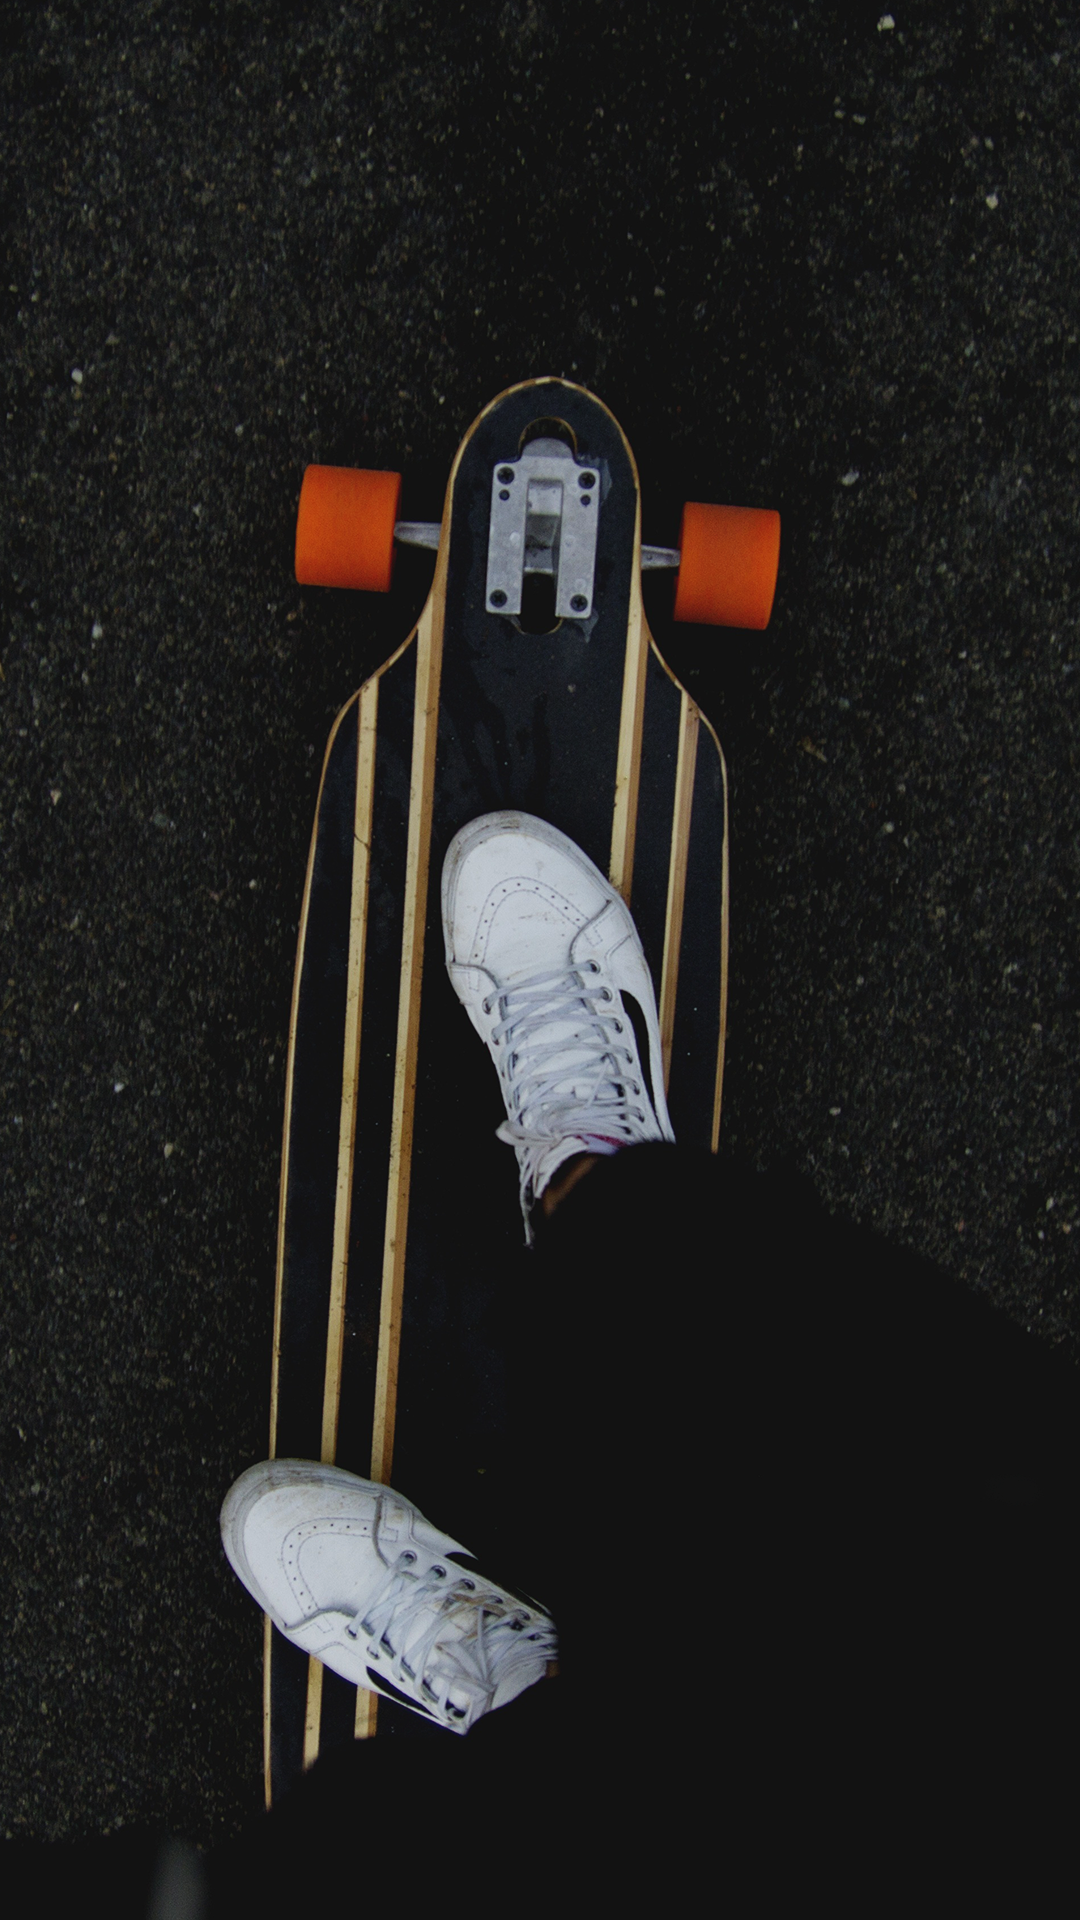 Skateboard Iphone Wallpapers